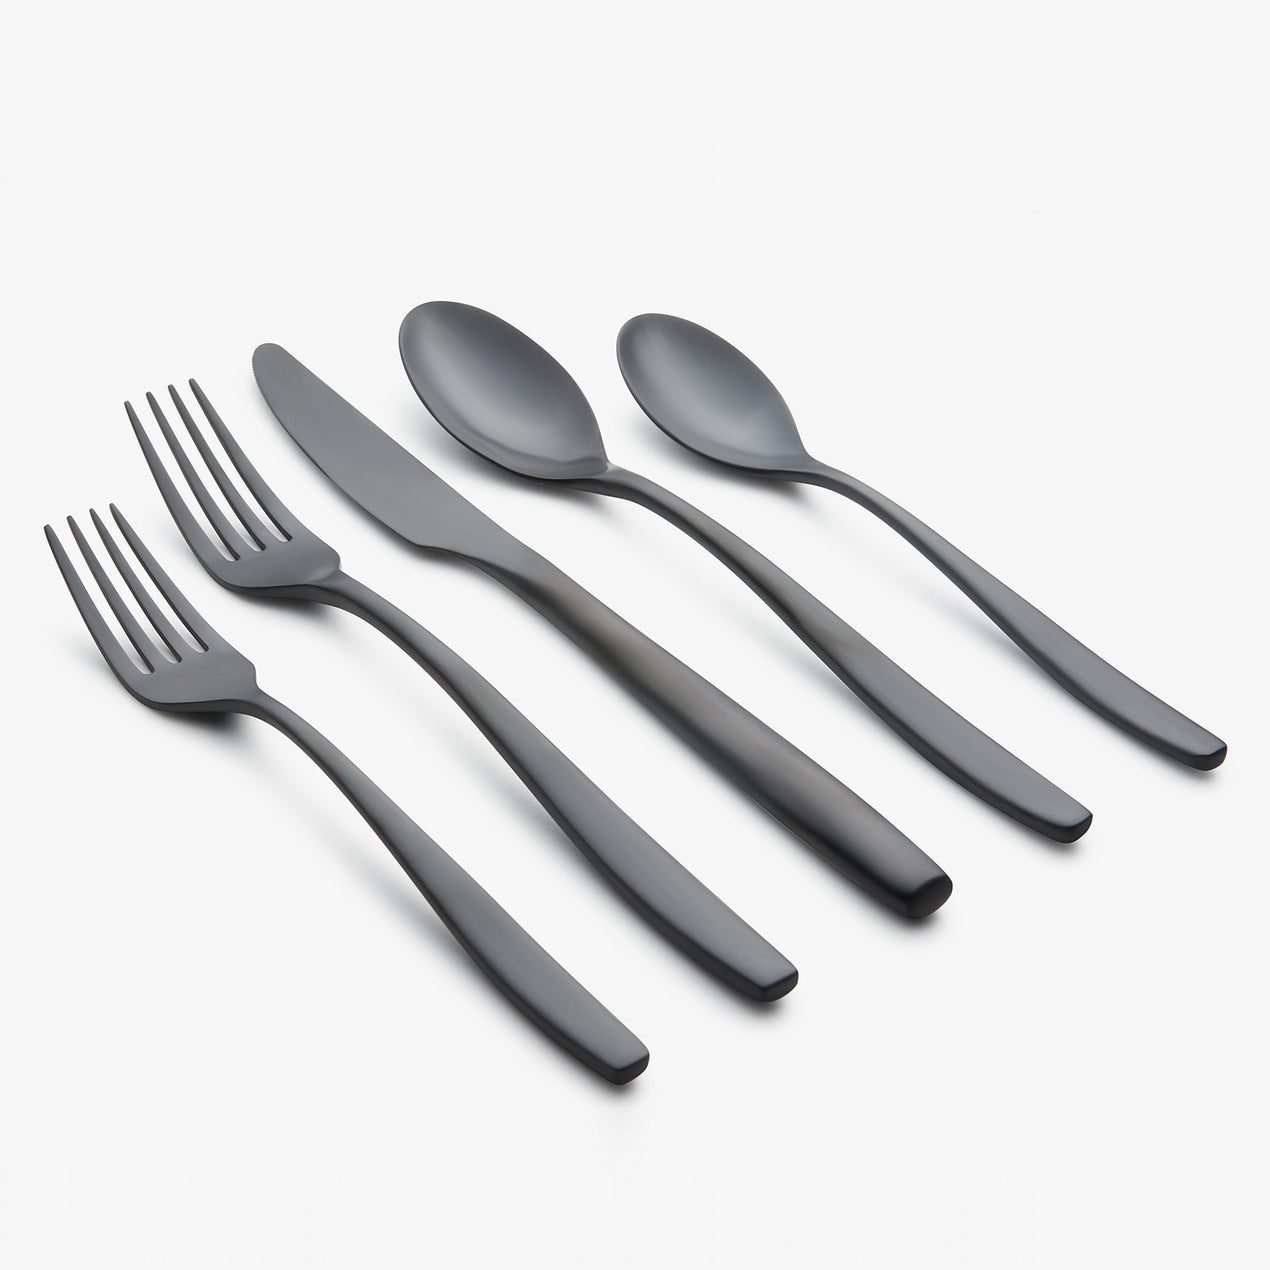 Matte Black Silverware Set, Satin Finish Stainless Steel Cutlery